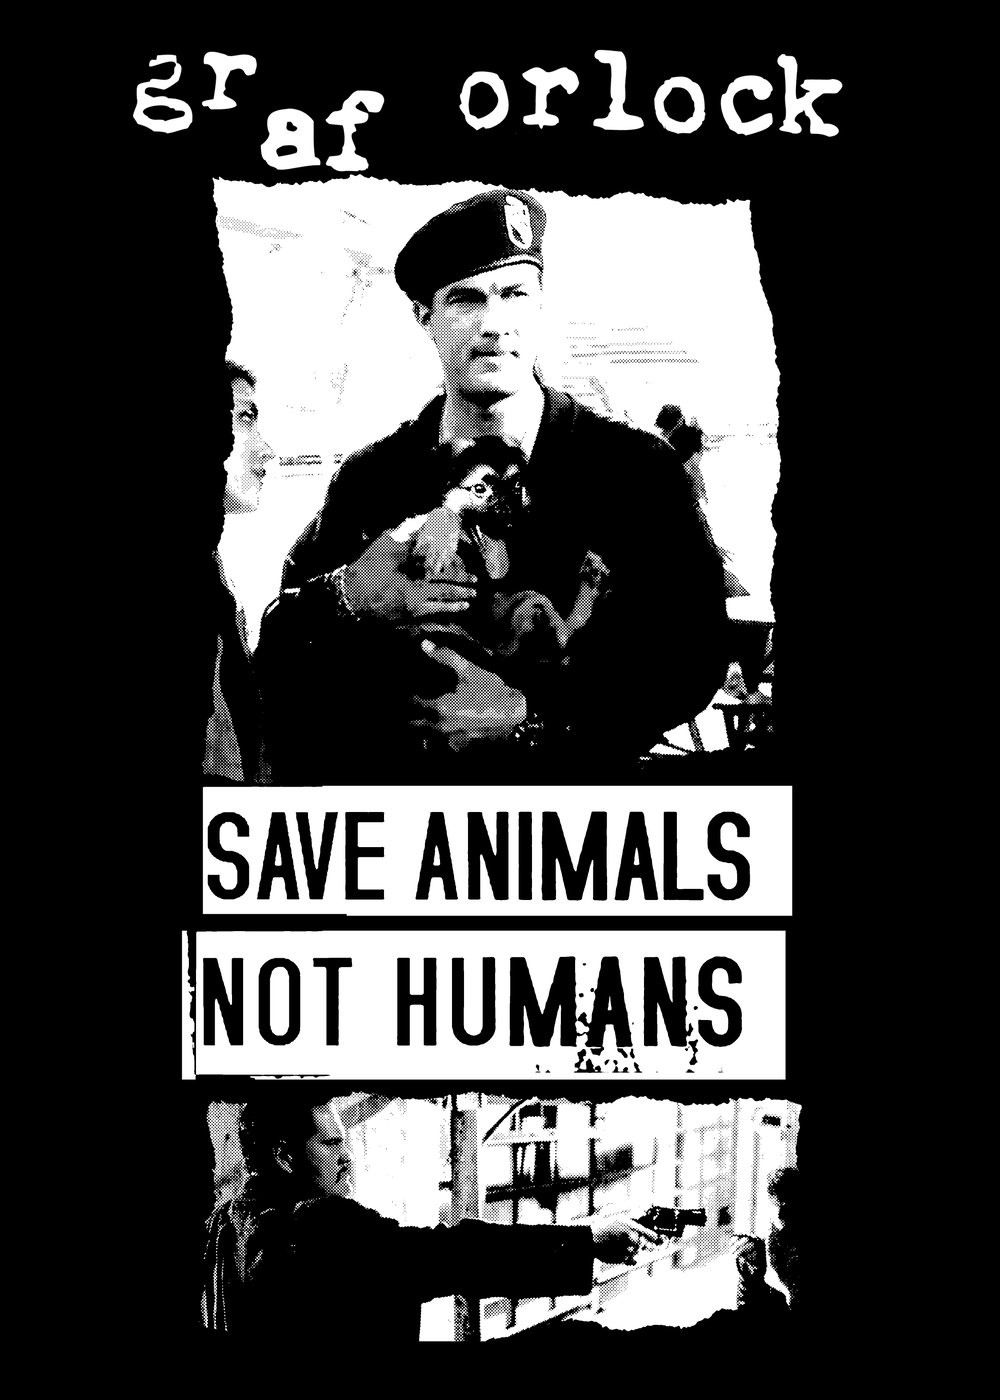 Graf Orlock "Save Animals Not Humans"